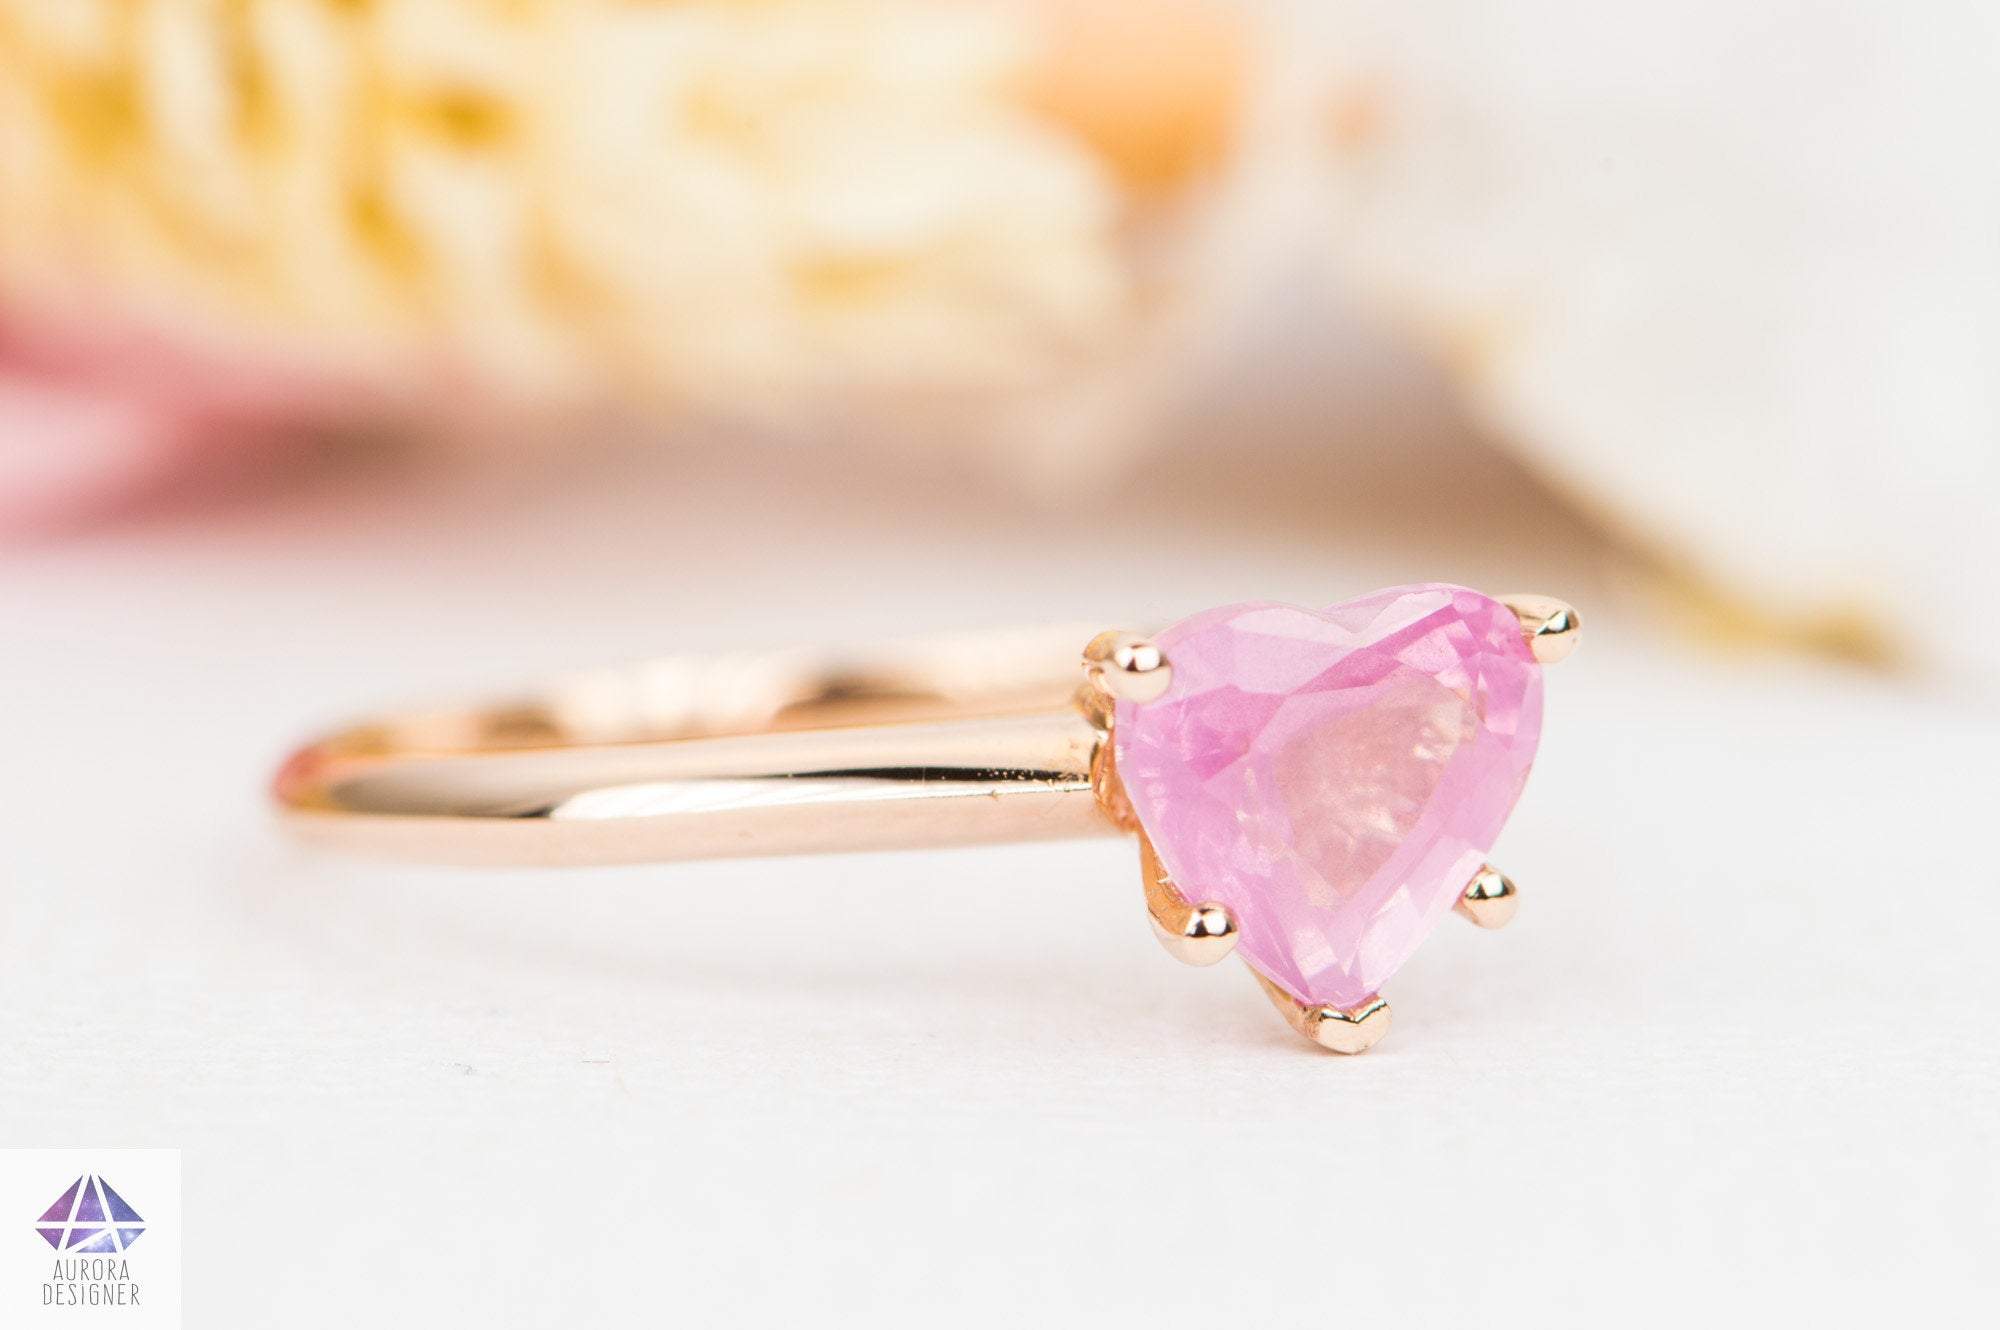 Pink Baguette Heart Ring – GoldDipped